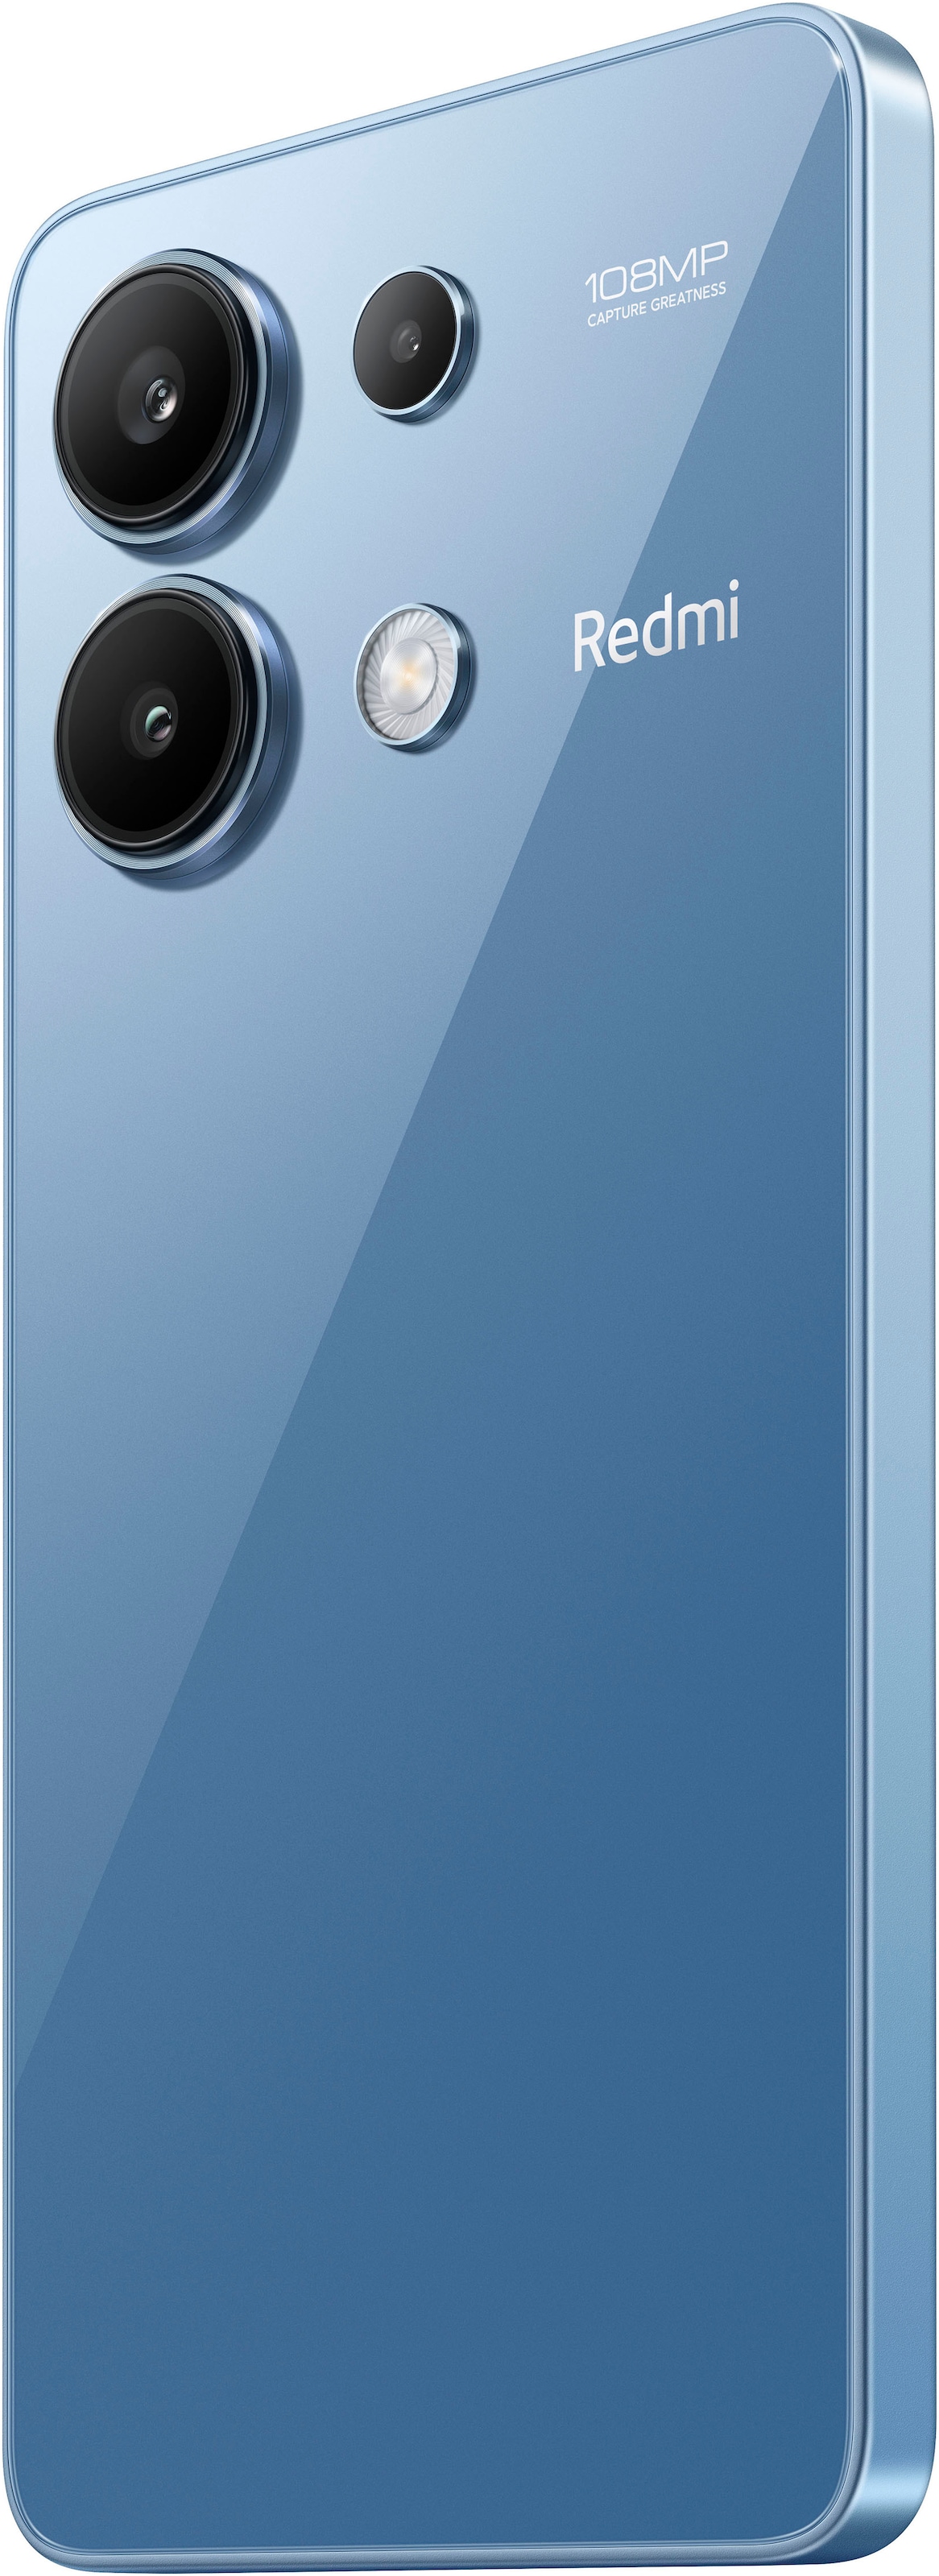 Xiaomi Smartphone »Redmi Note 13 8+128 GB«, Ice Blue, 16,94 cm/6,67 Zoll, 128 GB Speicherplatz, 108 MP Kamera